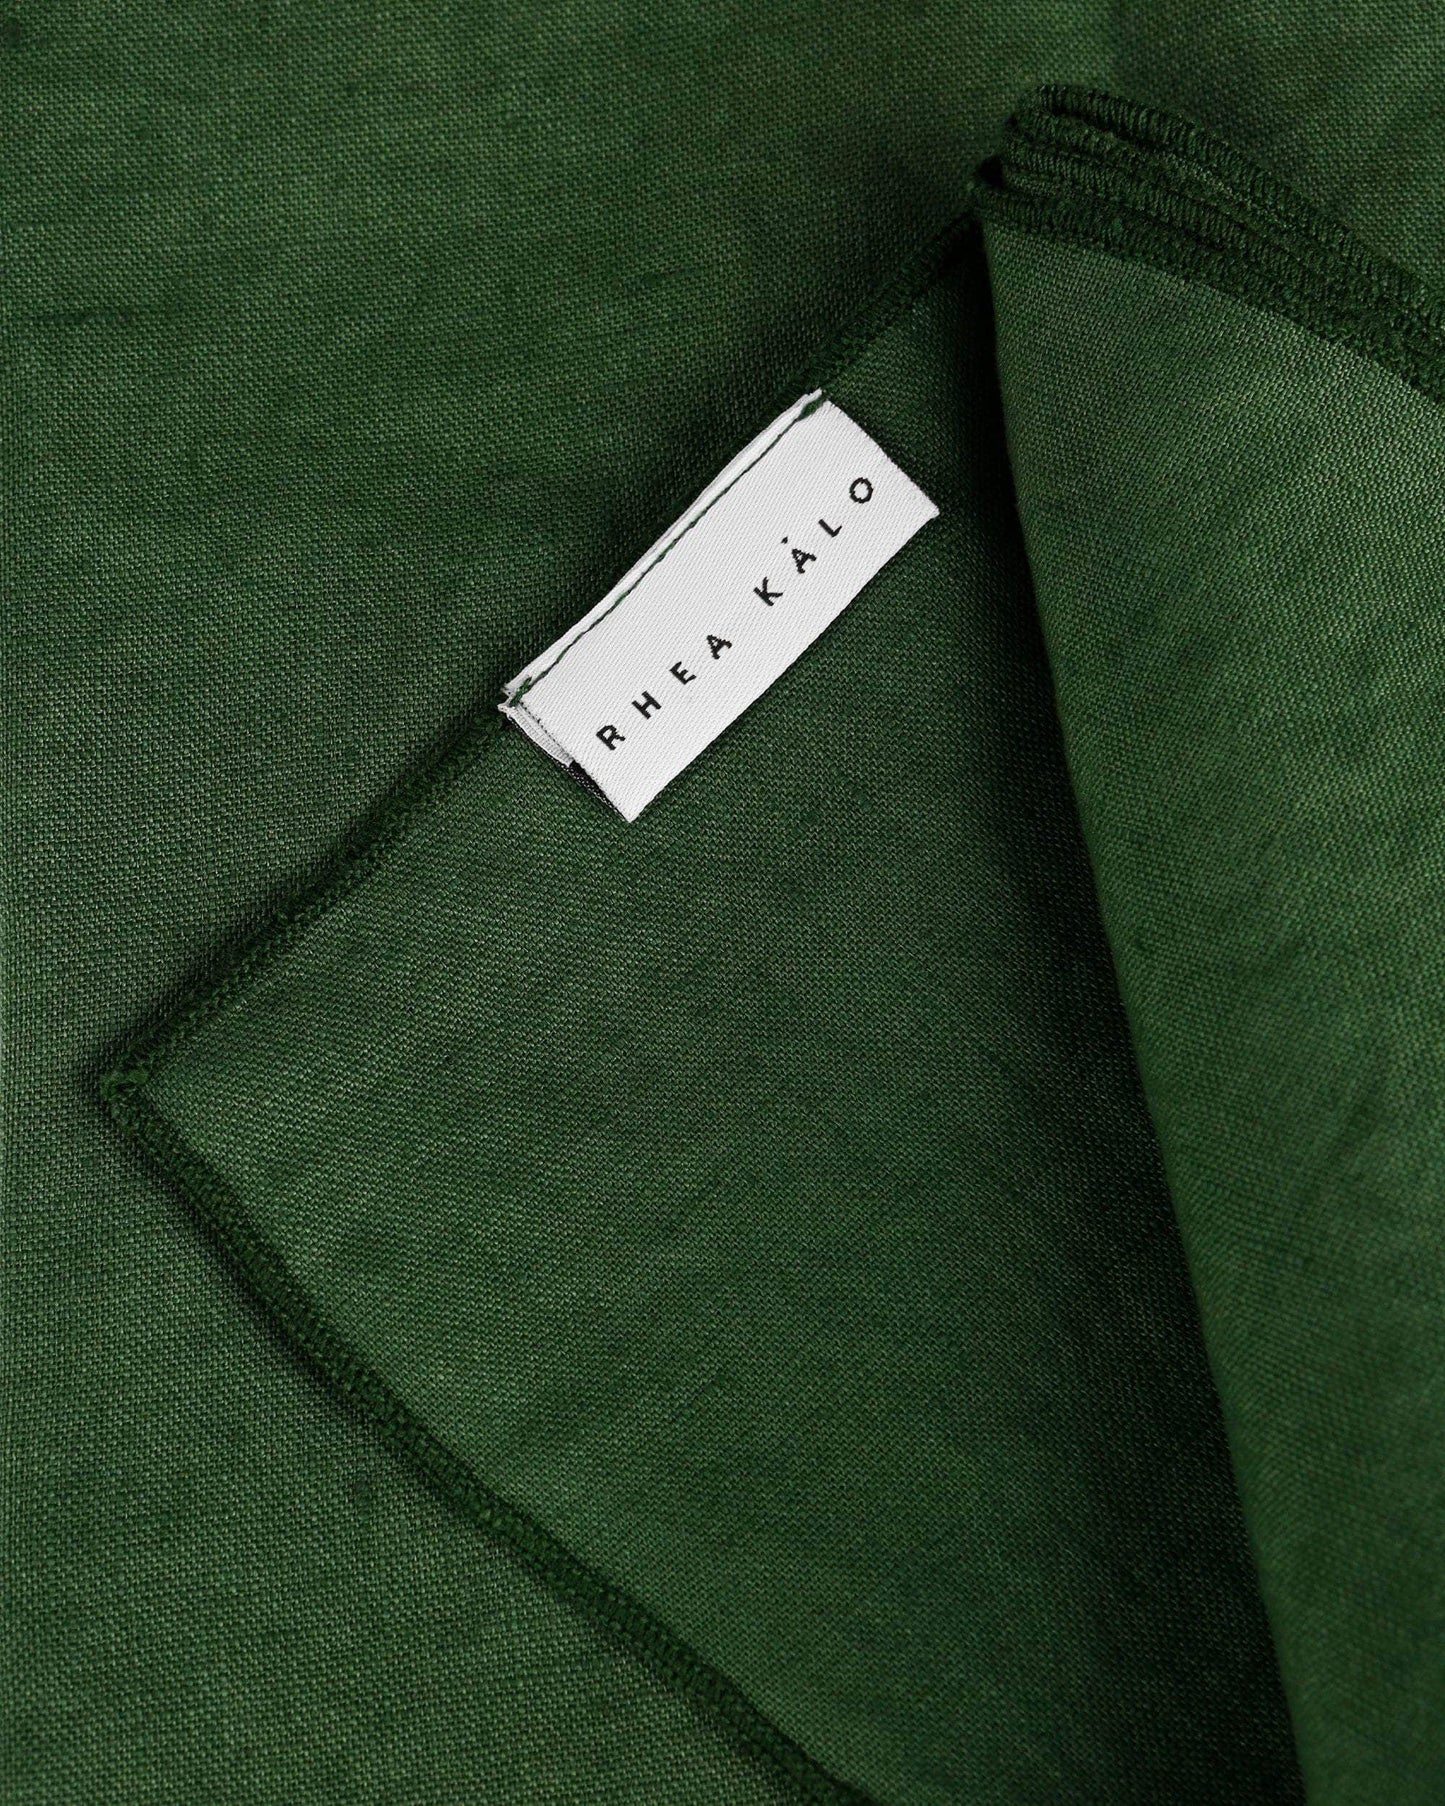 Green Linen Napkin